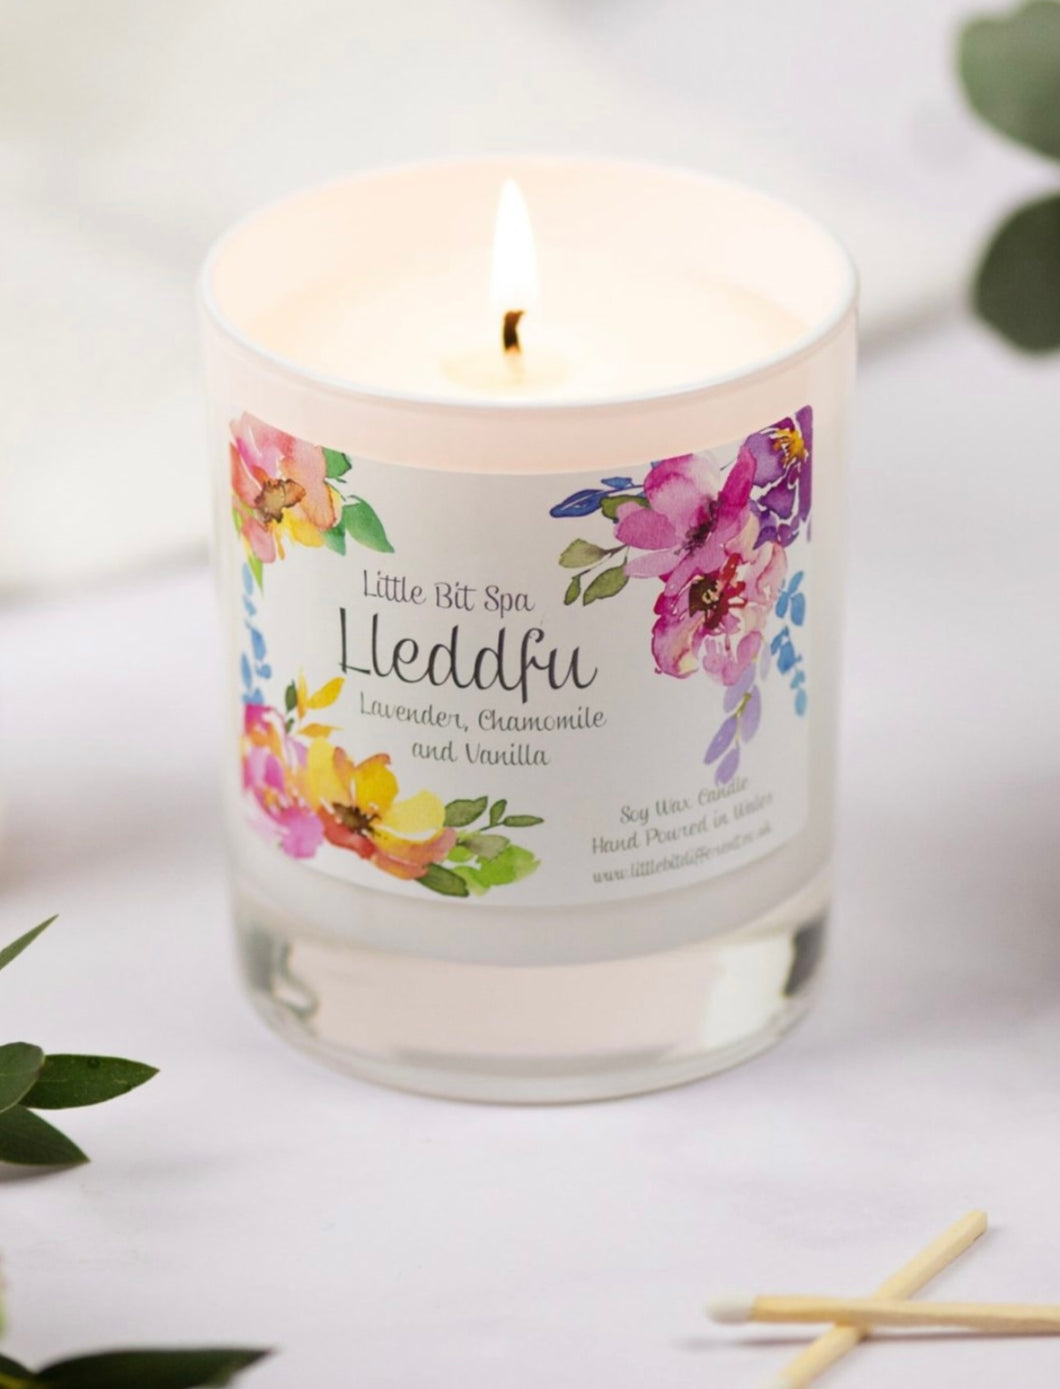 Canhwyll fegan ‘Lleddfu’ arogl lafant, chamomile a fanila / ‘Lleddfu’ (soothe) lavender, chamomile and vanilla vegan scented candle